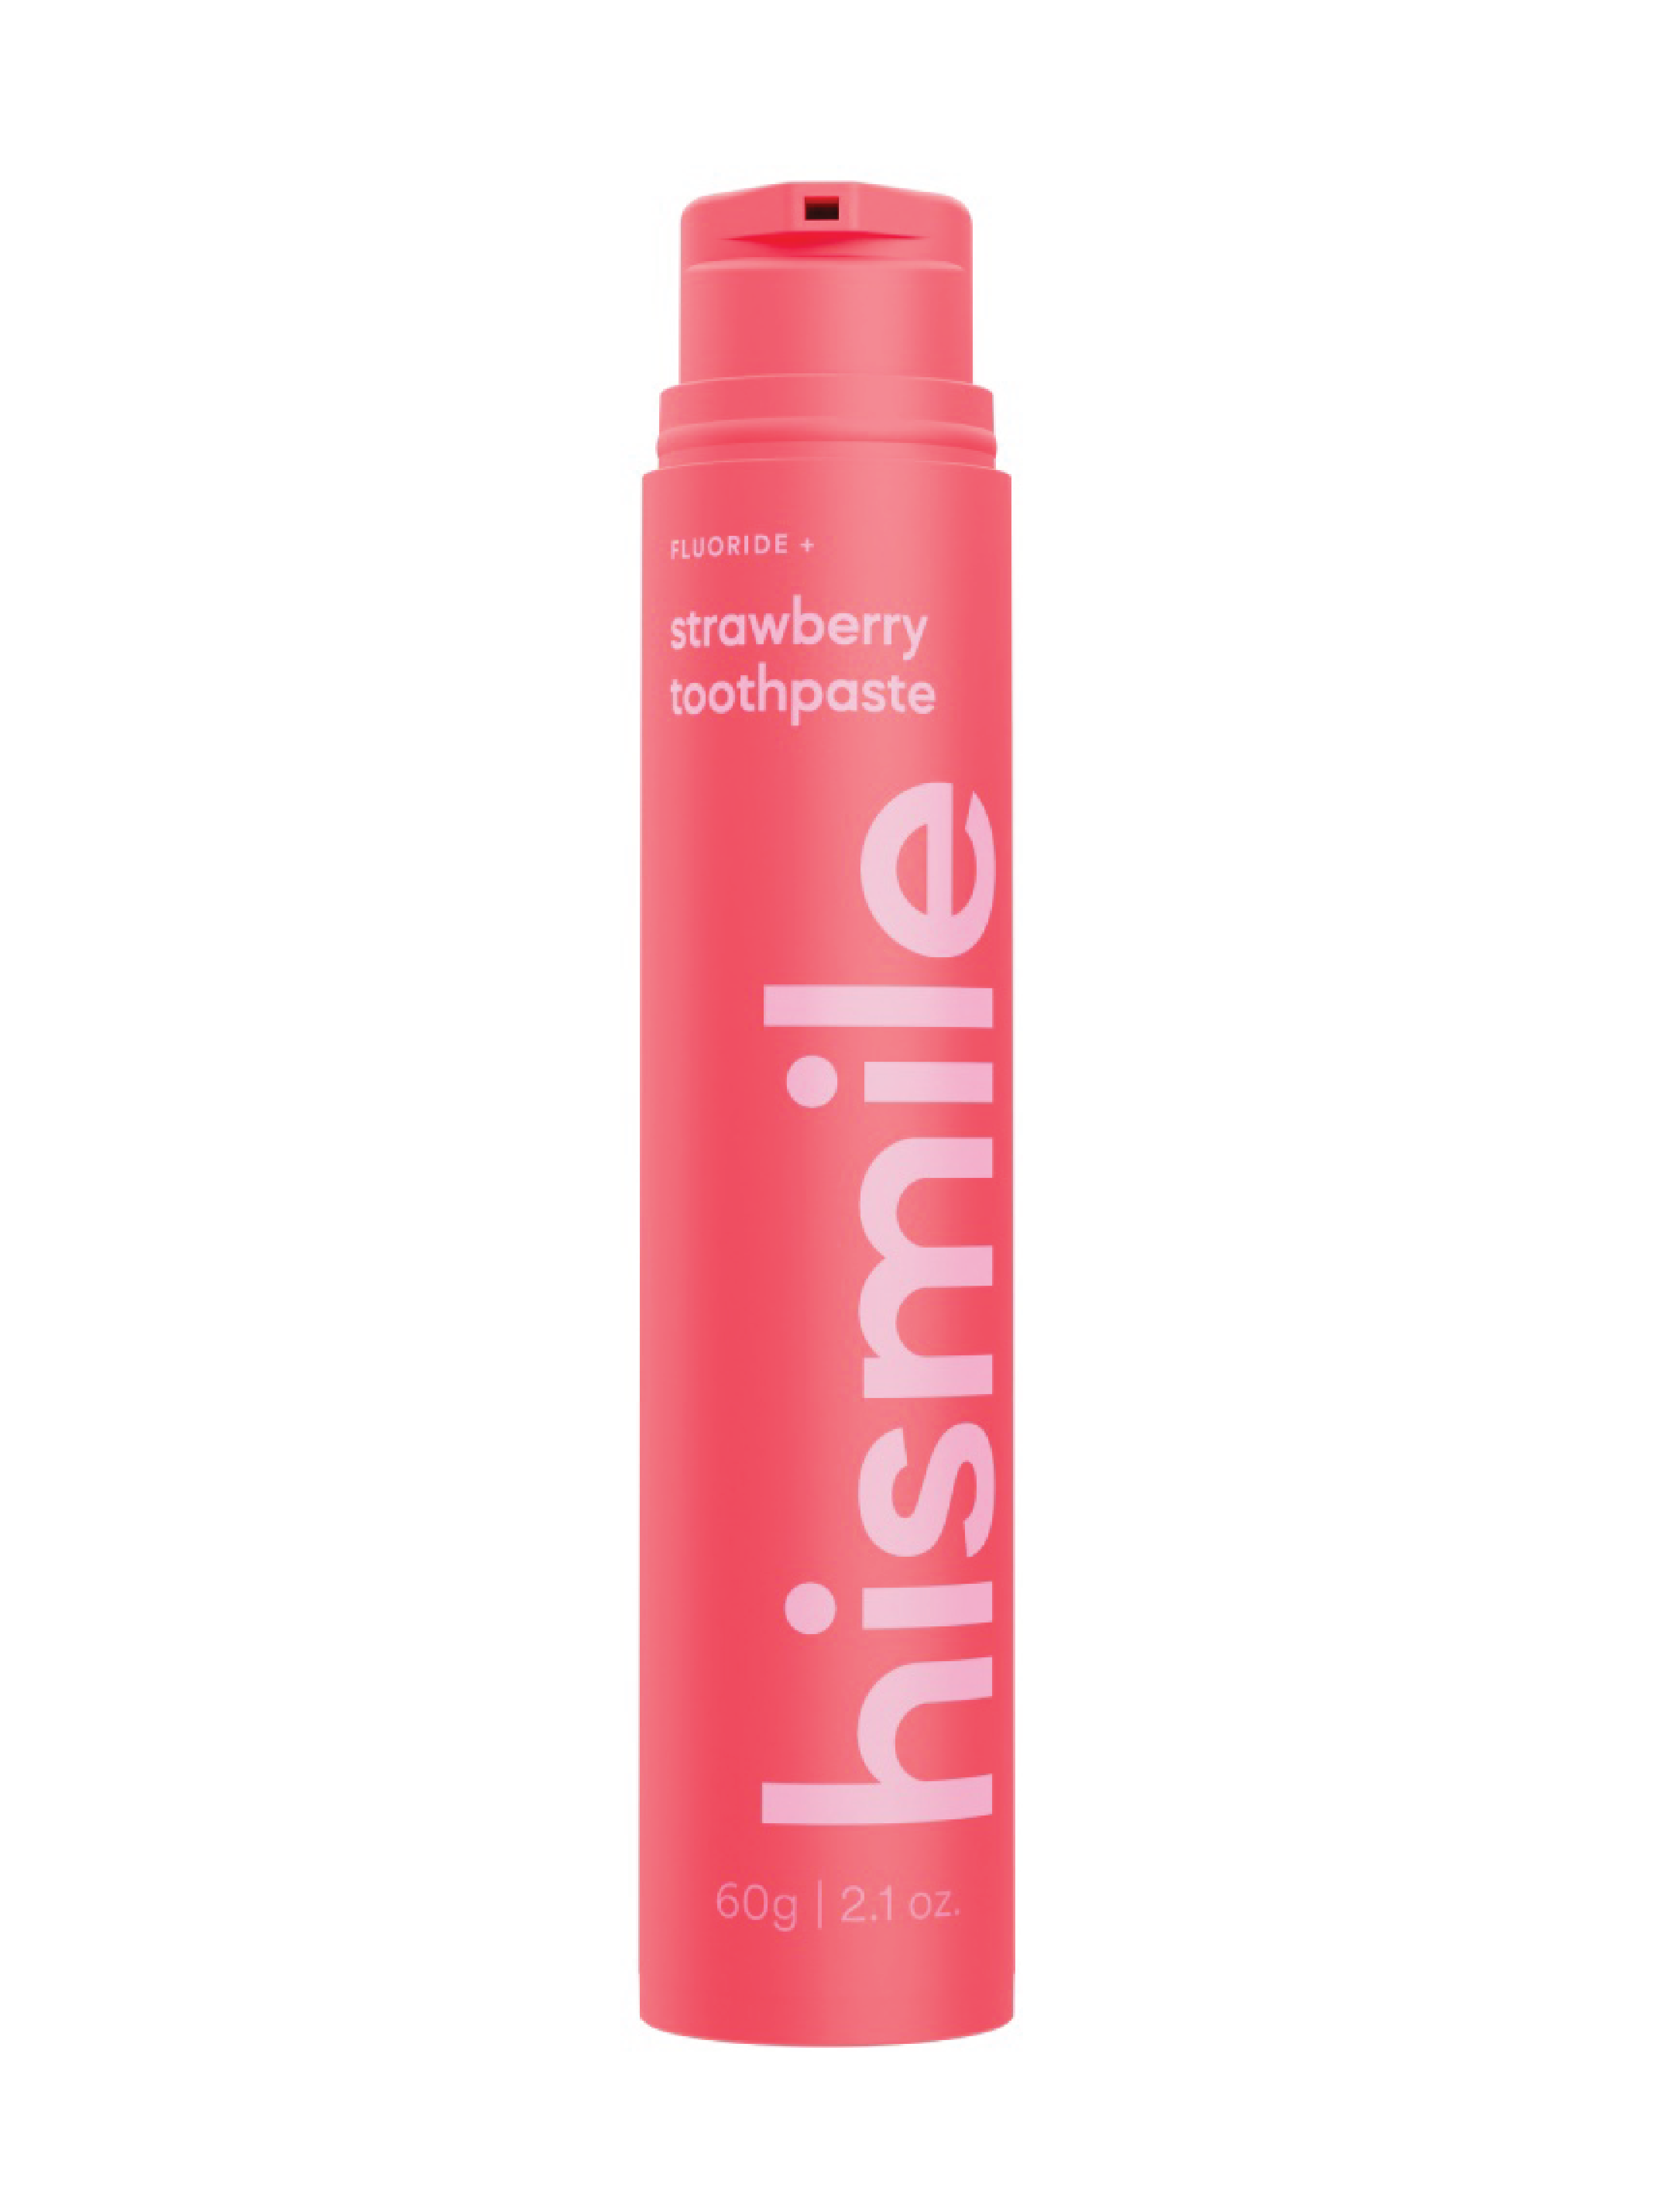 Hismile Strawberry Toothpaste, 60 g